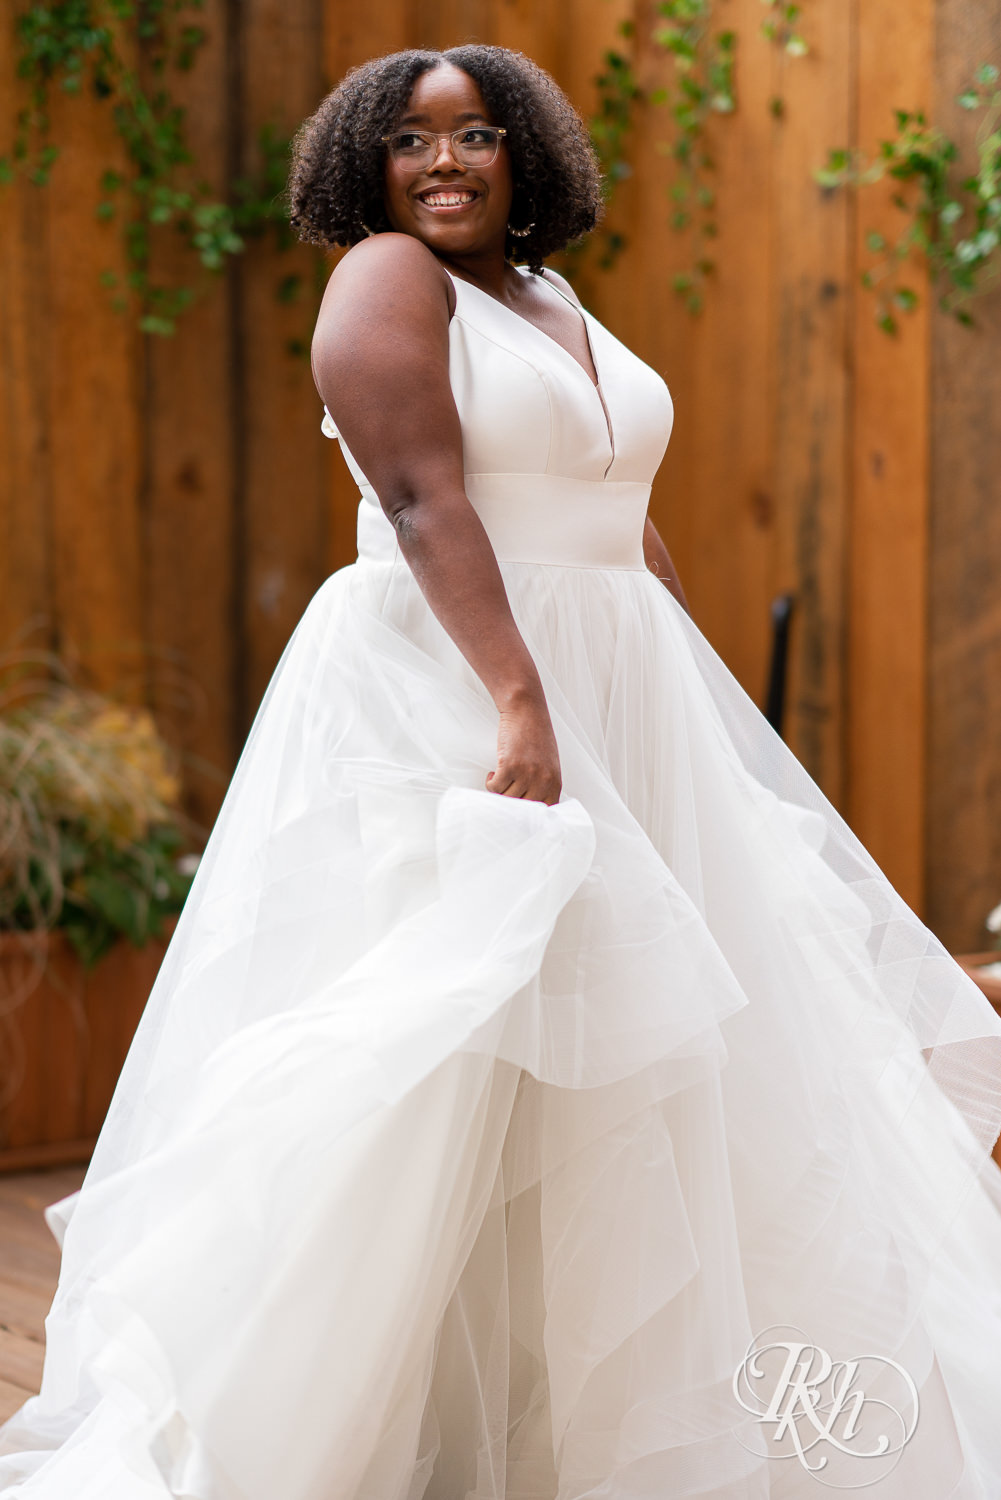 Black plus size bride with glasses dancing in wedding dress in Minneapolis, Minnesota.